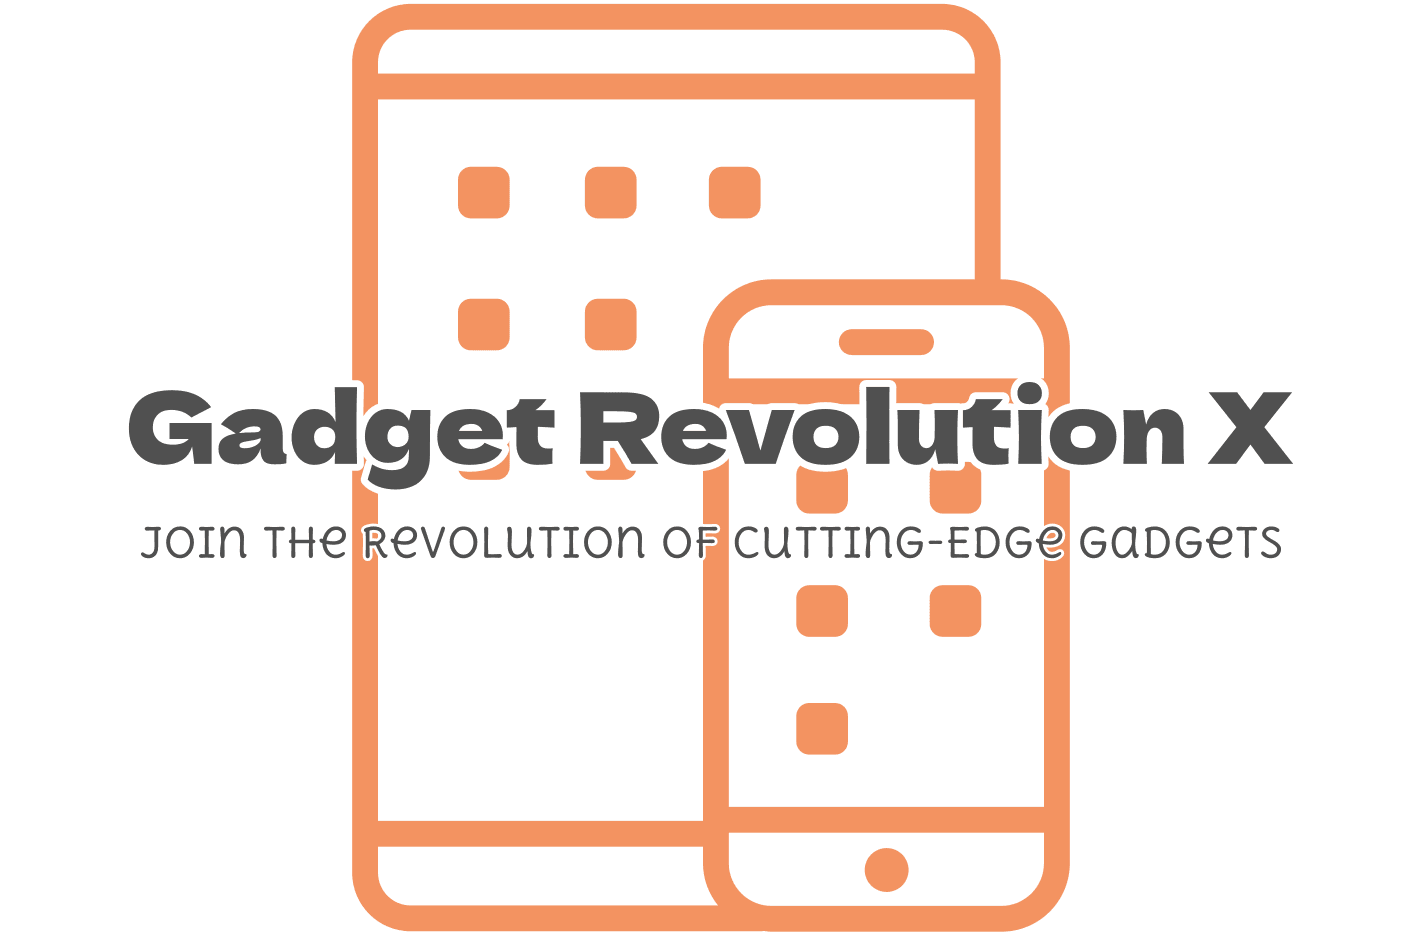 loga gadget revolution x